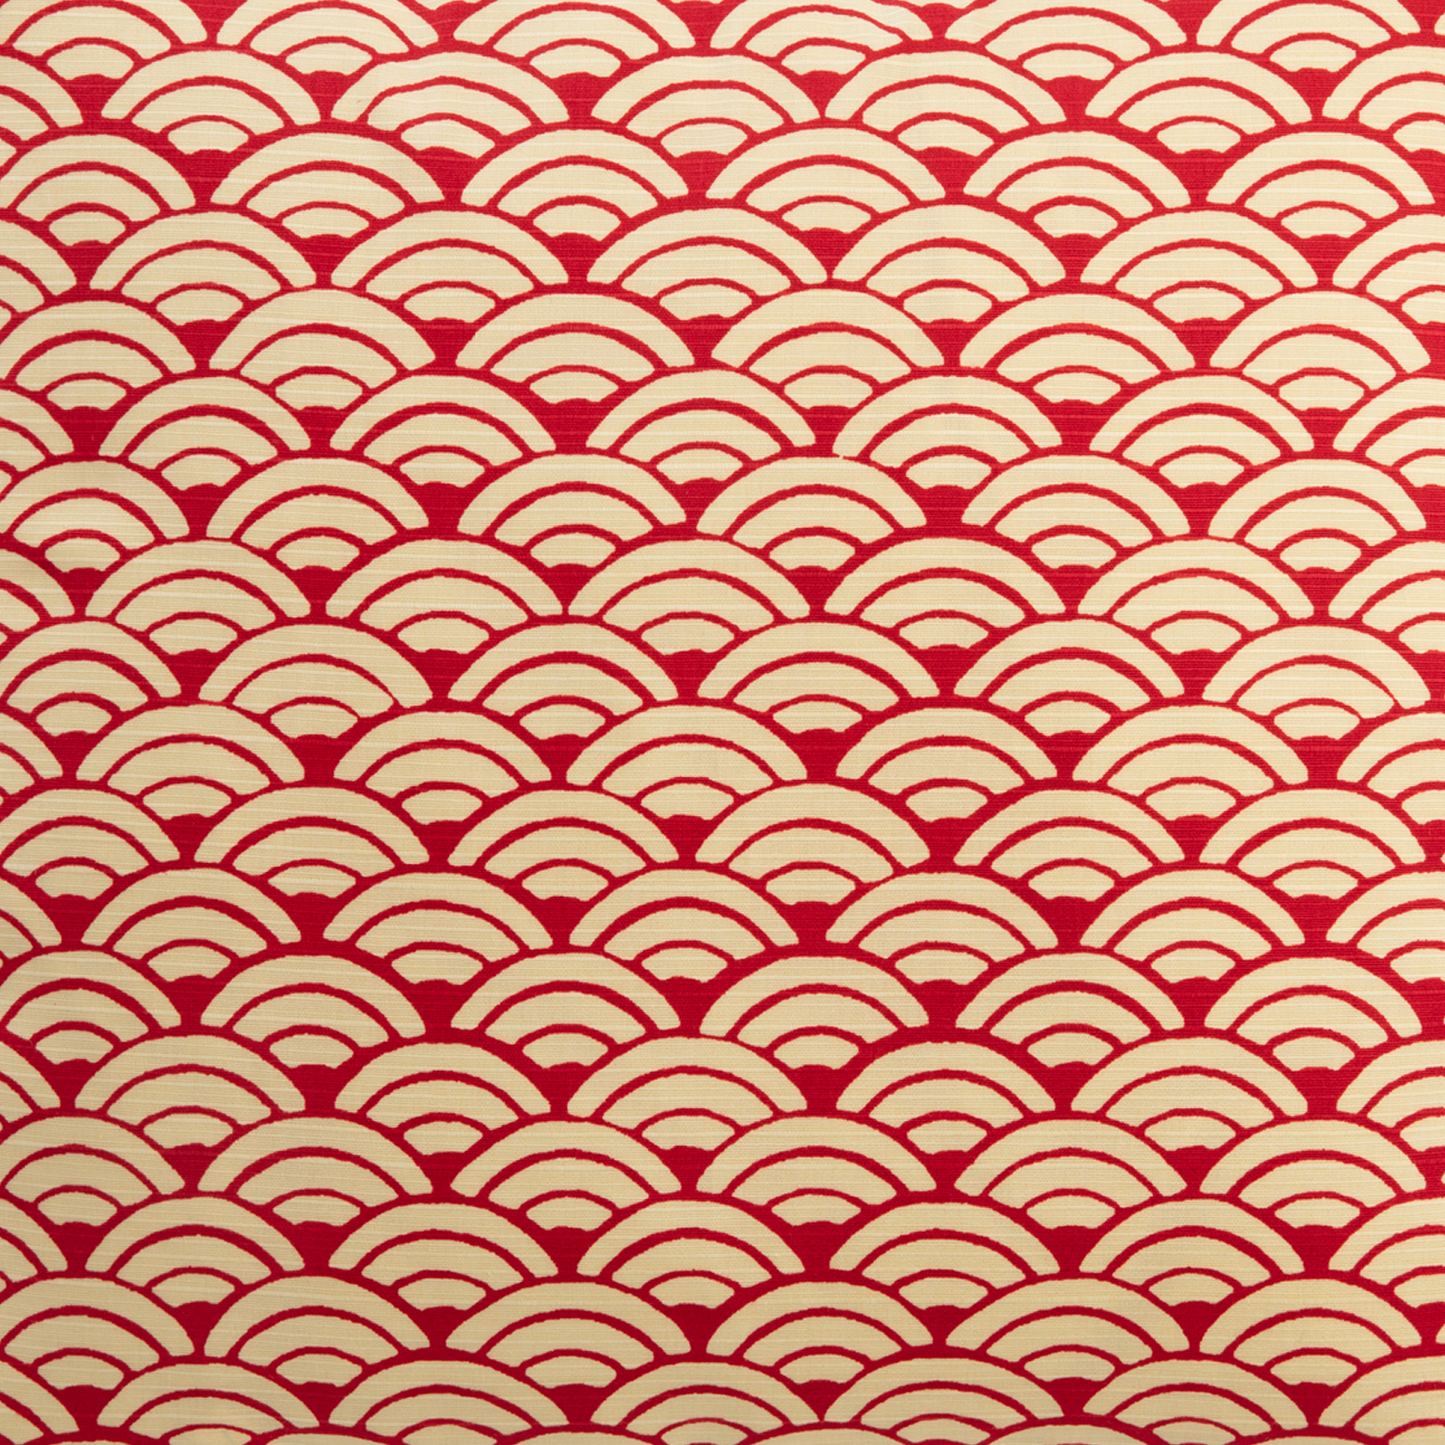 Imported Japanese Fabric - Jumbo Seika Ha Red_Fabric_Imported from Japan_100% Cotton_Japanese Sleep System